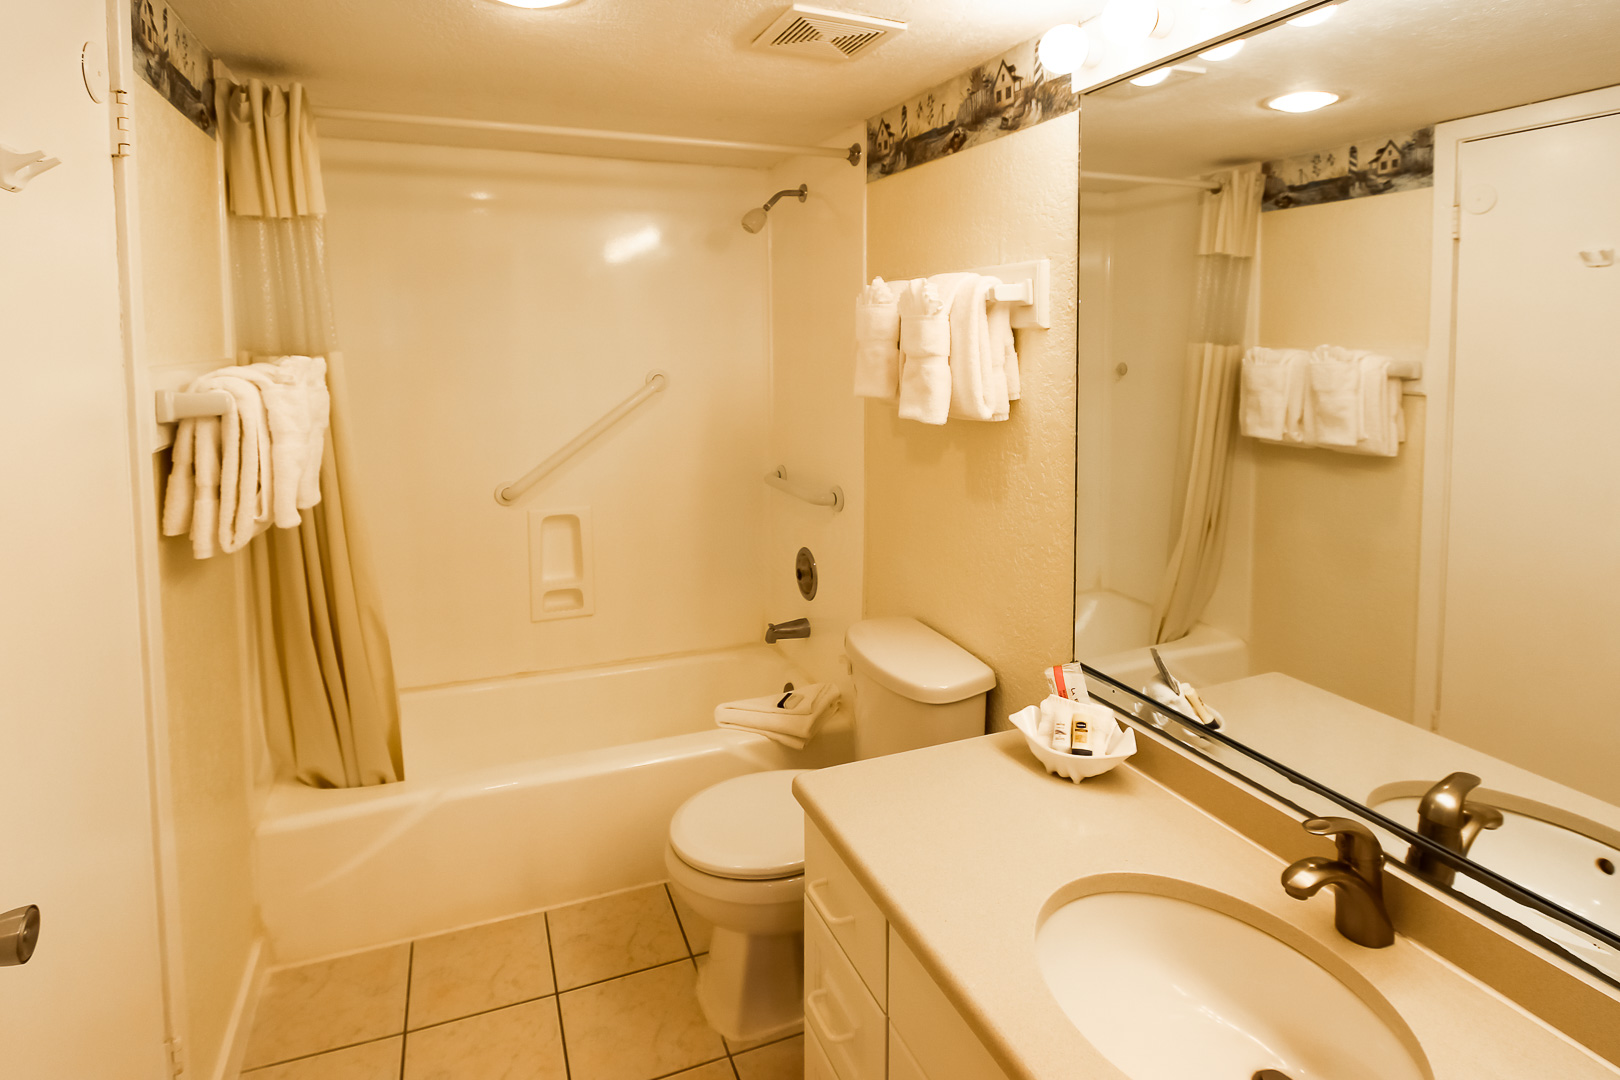 A clean bathroom at VRI's Players Club Resort in Hilton Head Island, South Carolina.